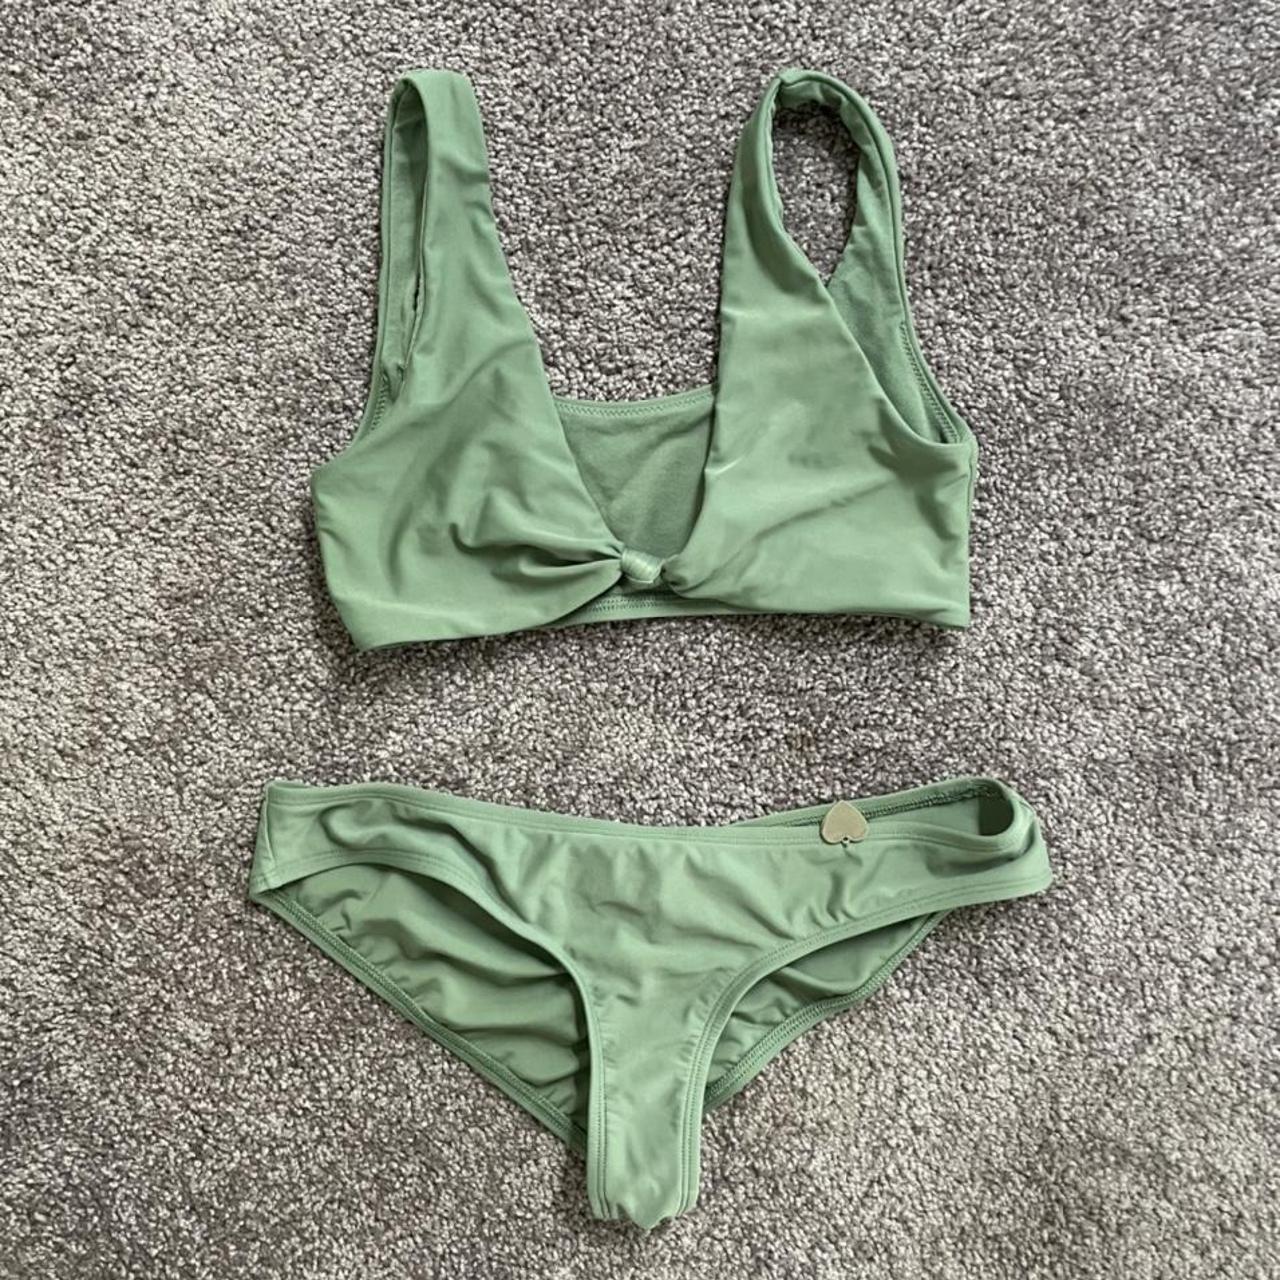 Body Glove Women's Green Bikinis-and-tankini-sets